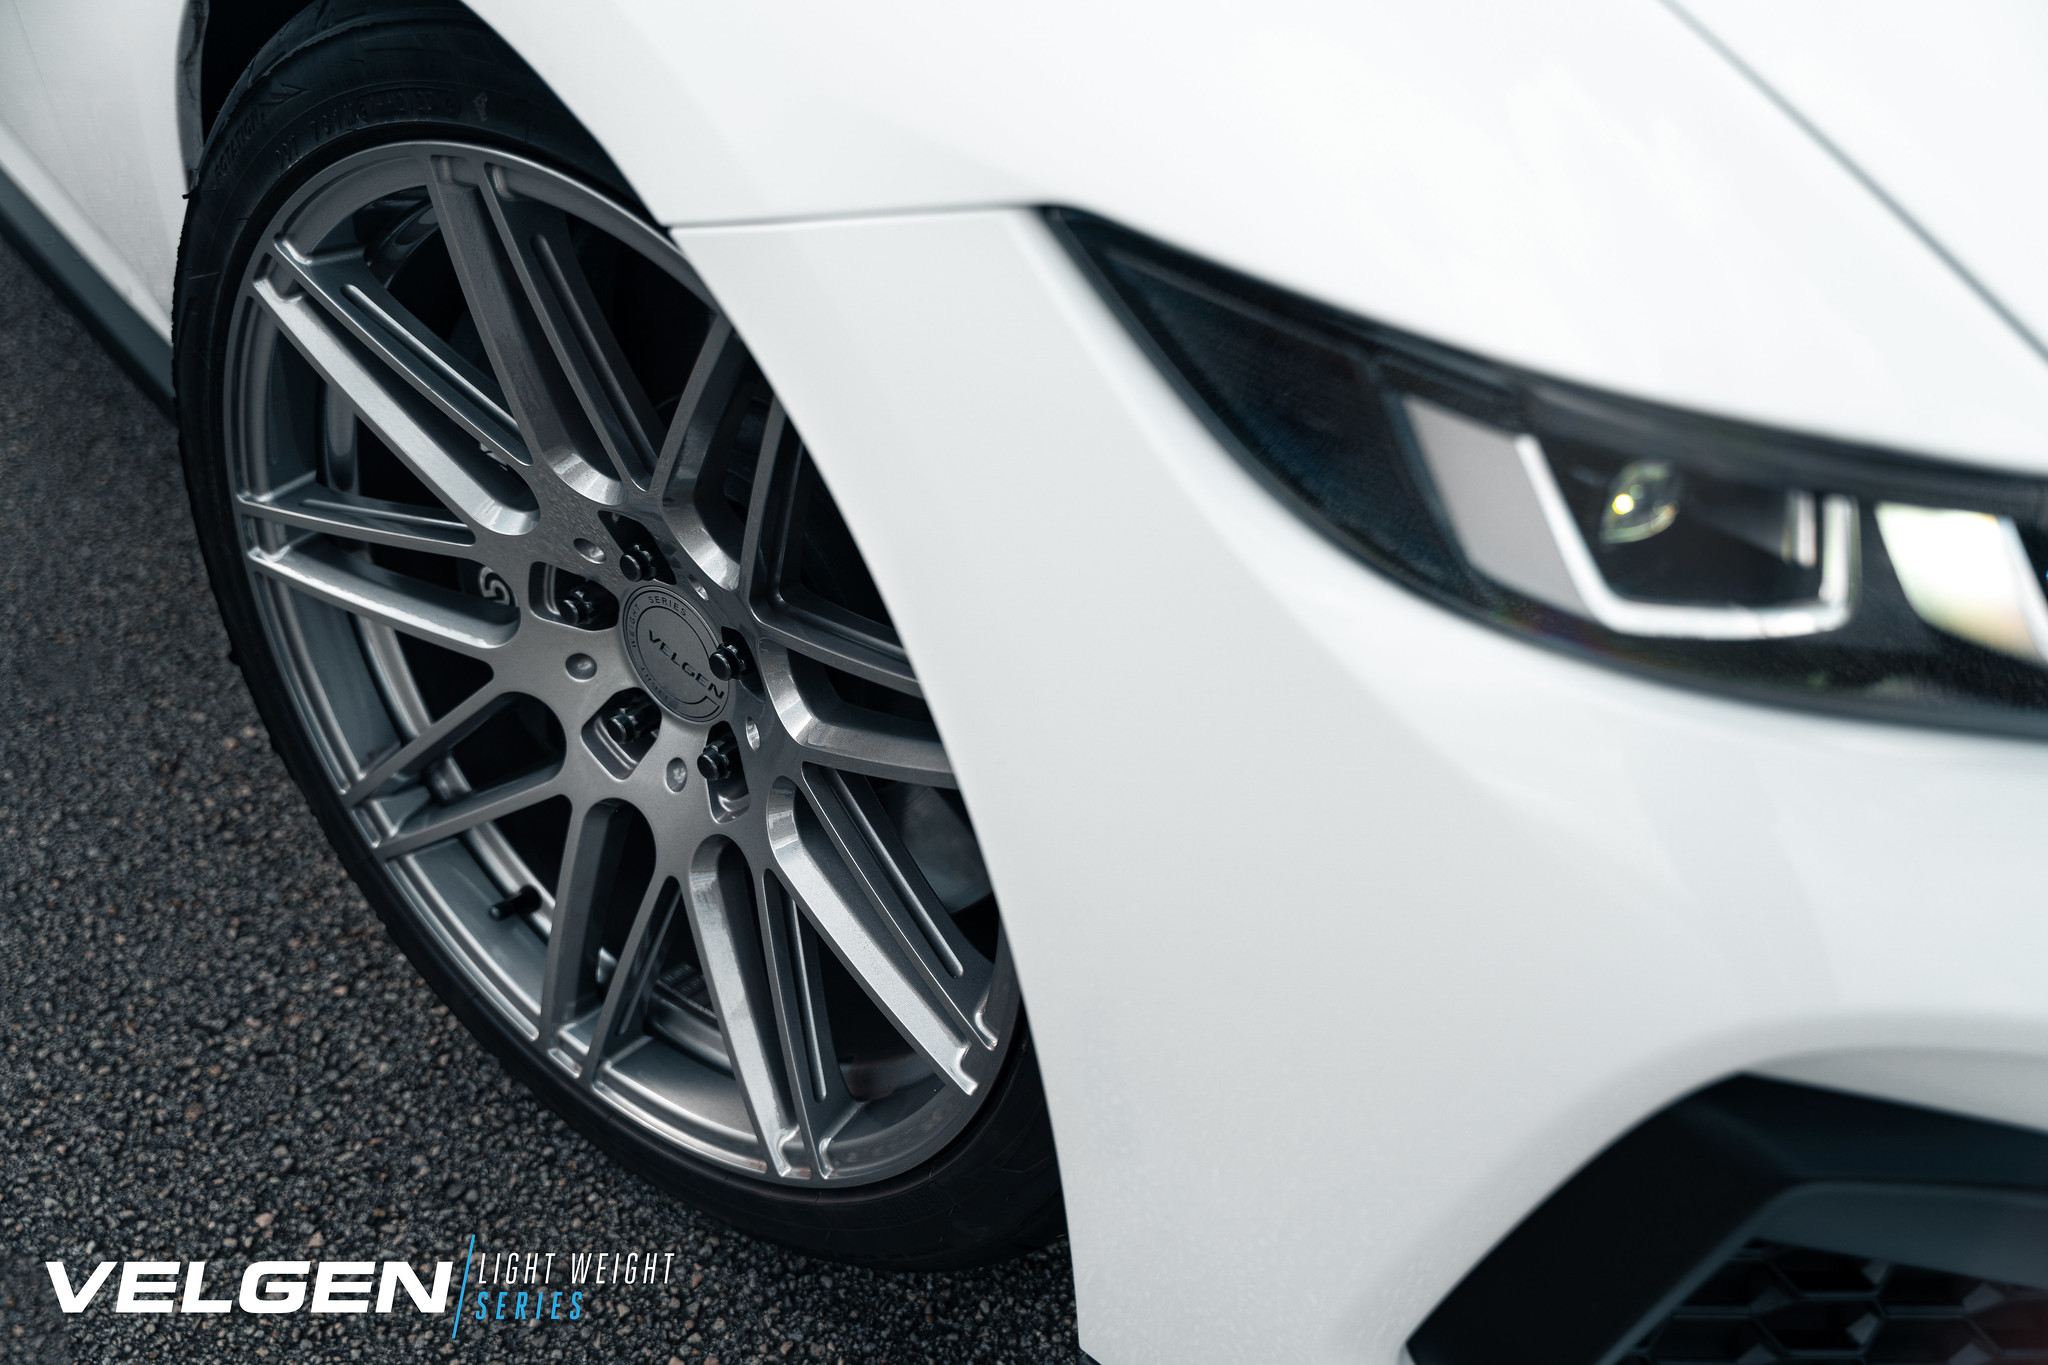 S650 Mustang Velgen wheels for your S650 Mustang | Vibe Motorsports 53217784193_44fb1bc839_k